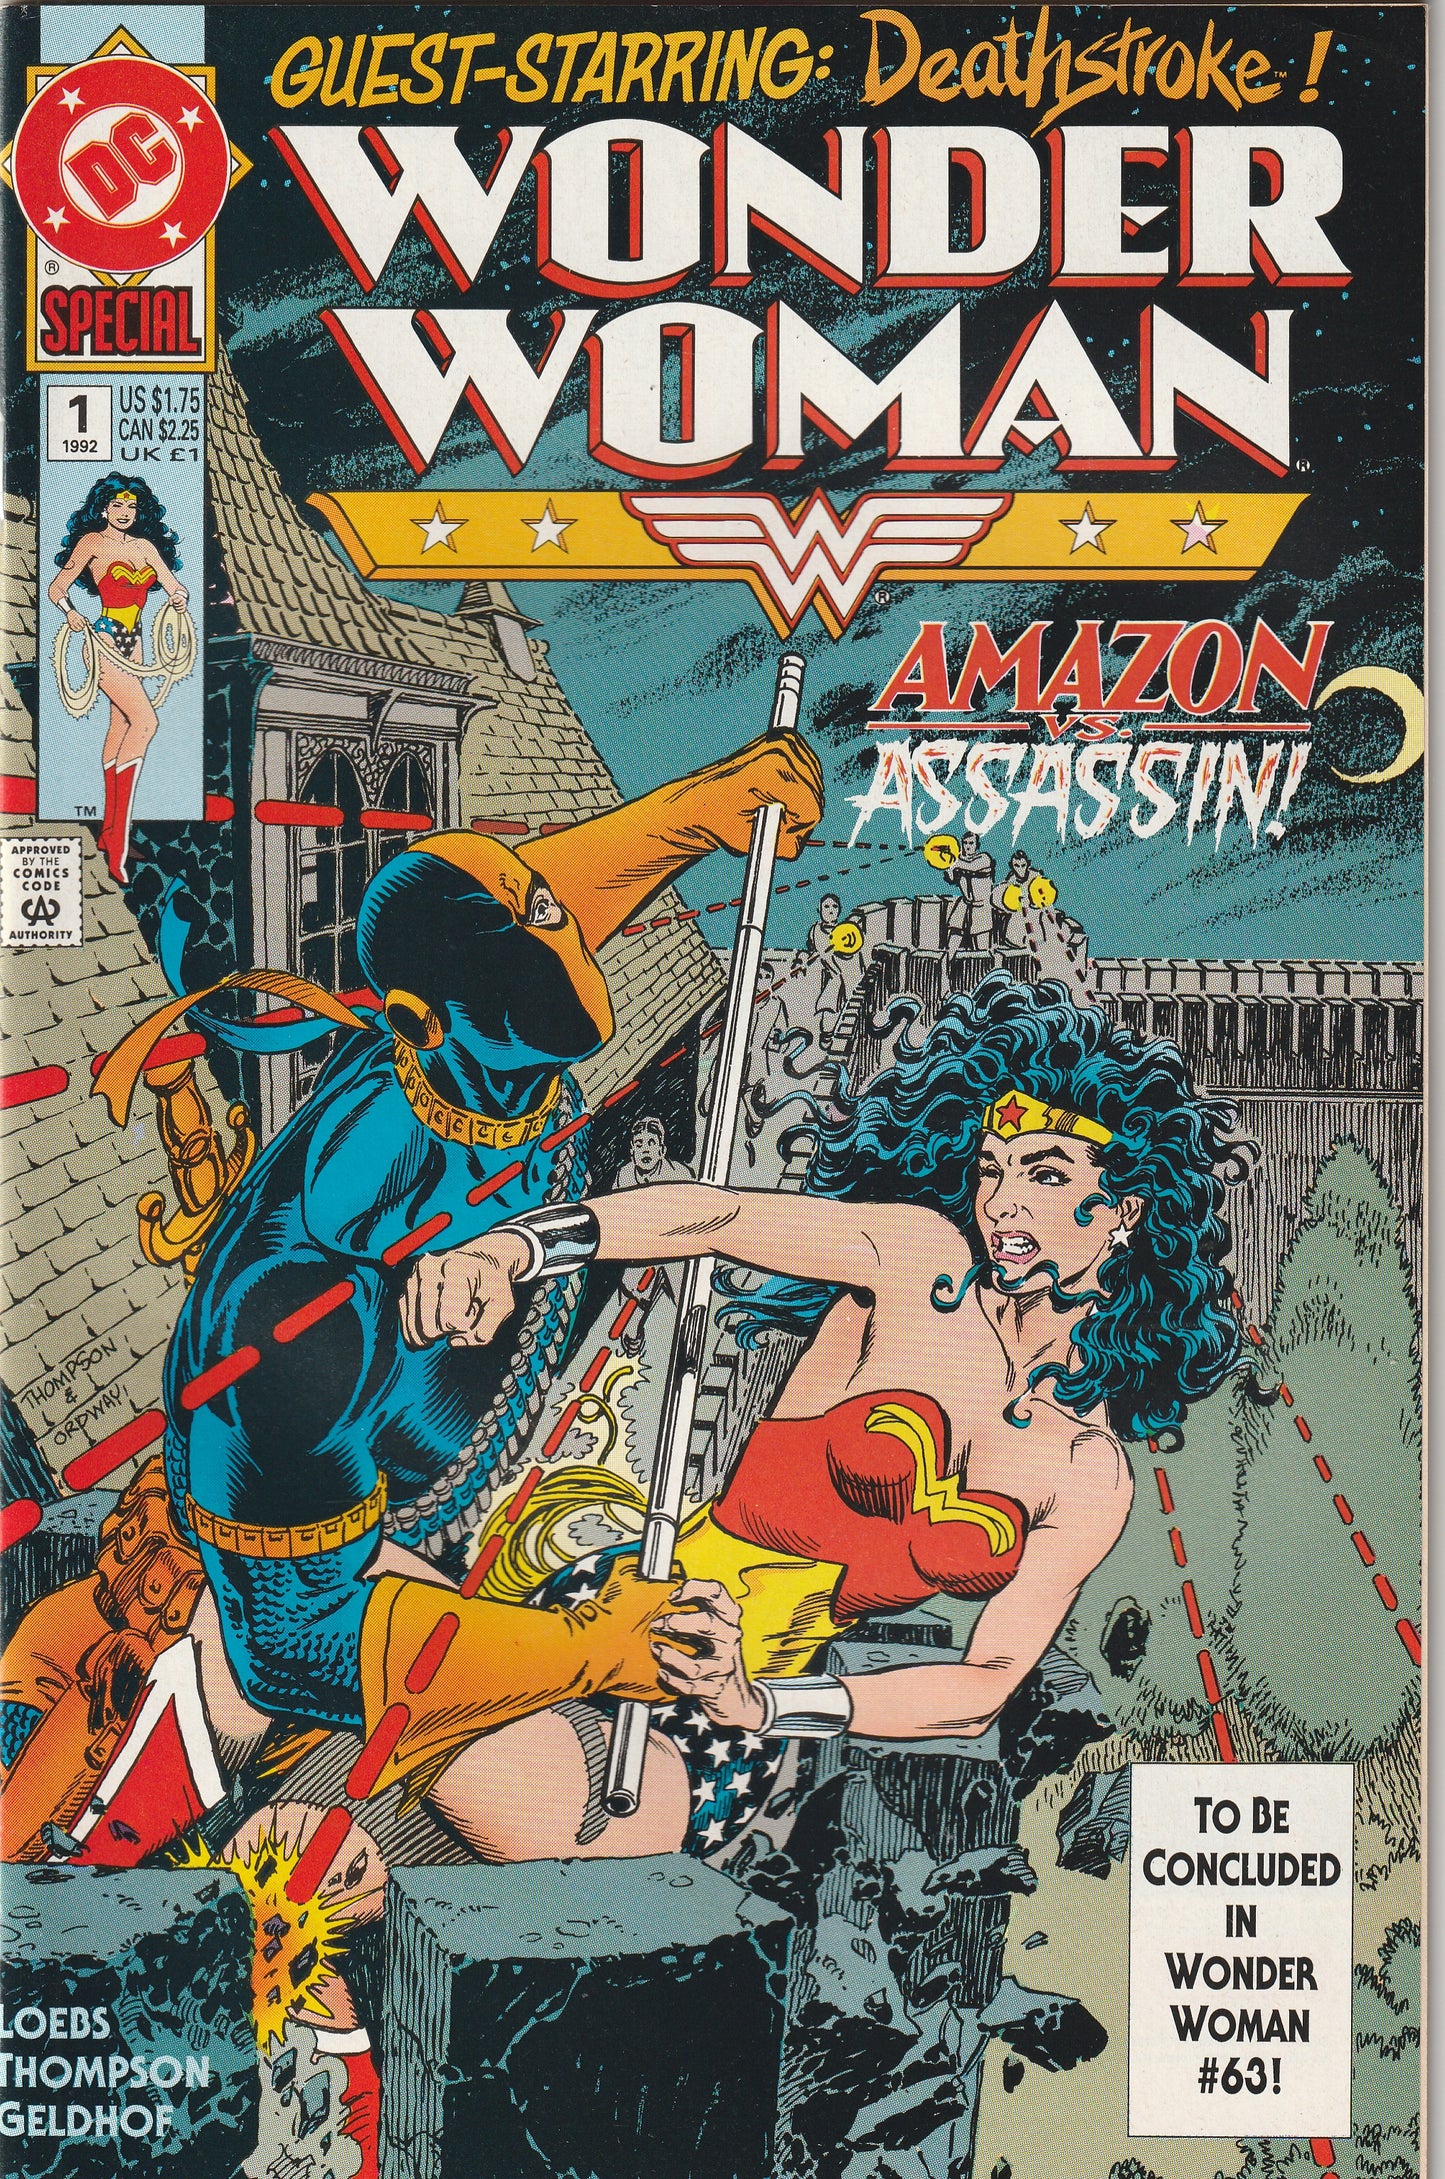 Wonder Woman Special #1 (1992) - Part One Operation Cheetah - Amazon vs Assassin